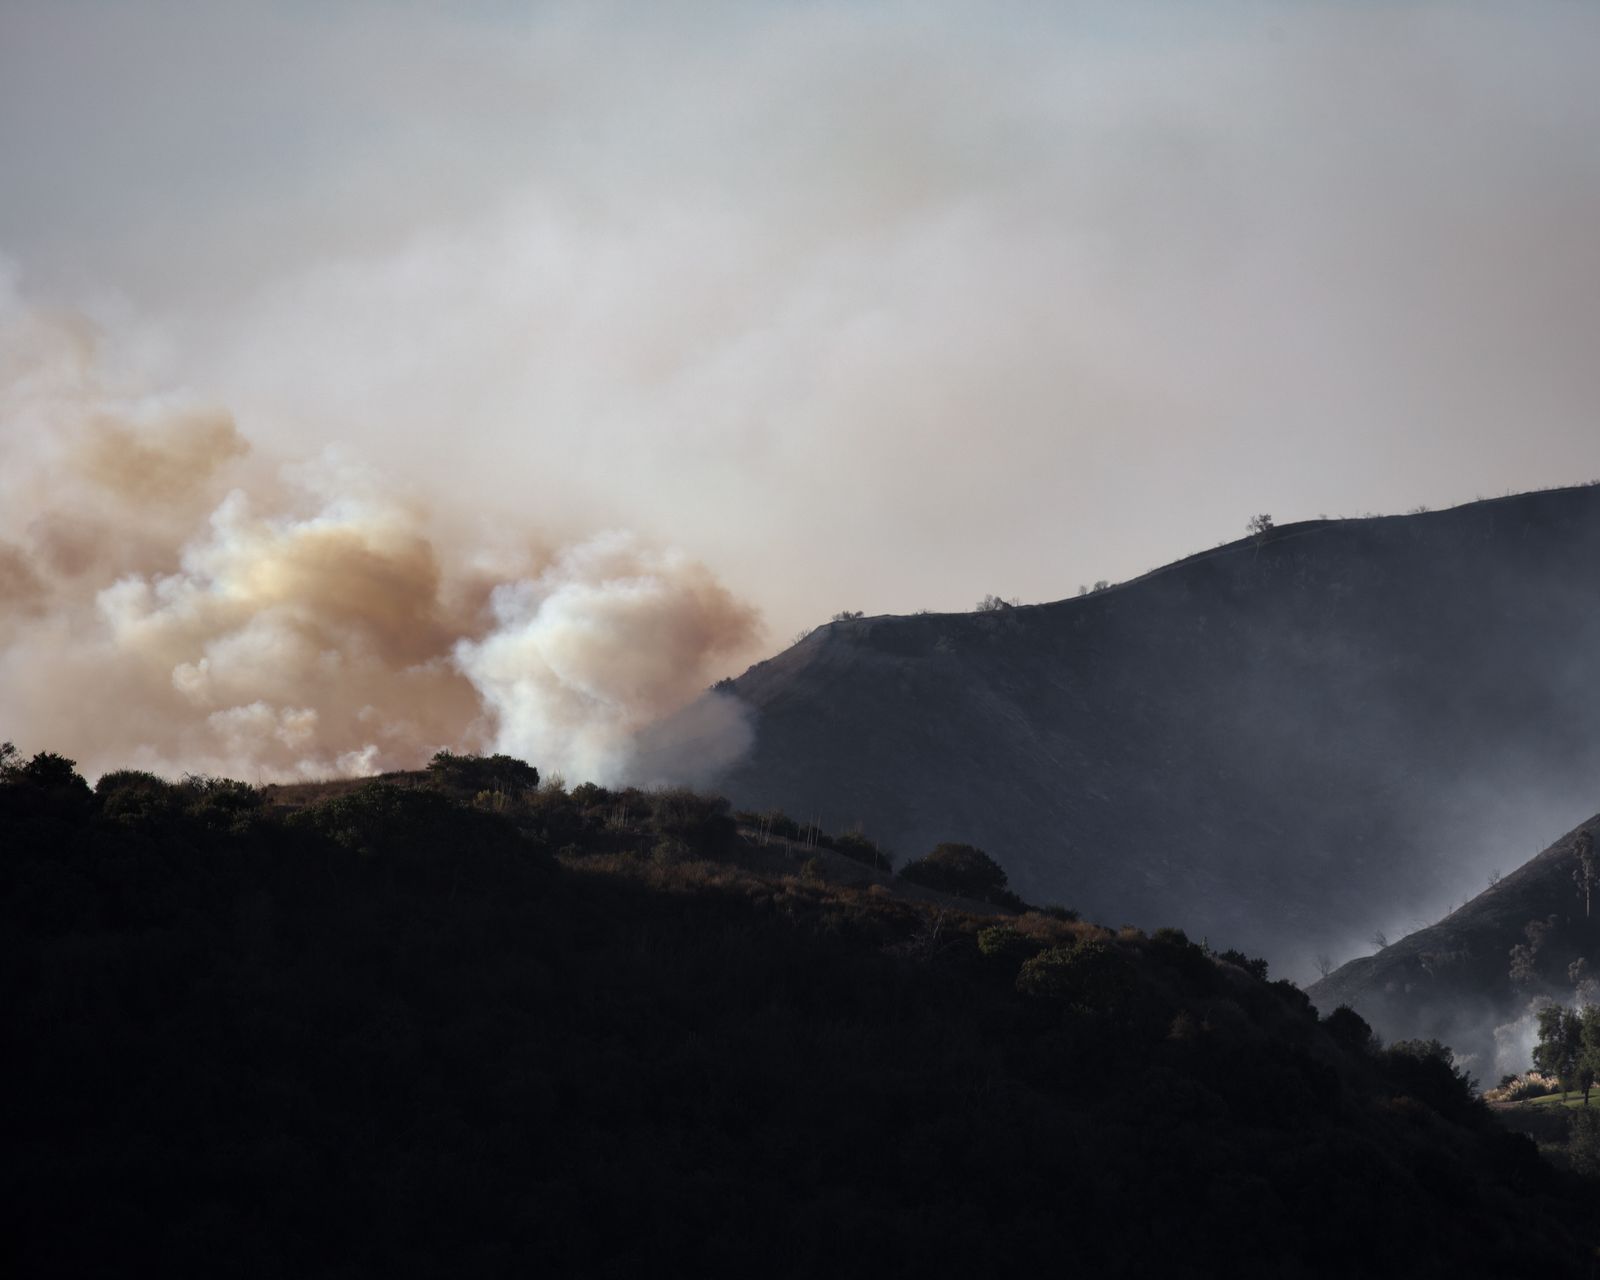 © Anastasia Samoylova - Smoke rising from Santa Monica Mountains during the Getty Fire. Los Angeles, CA